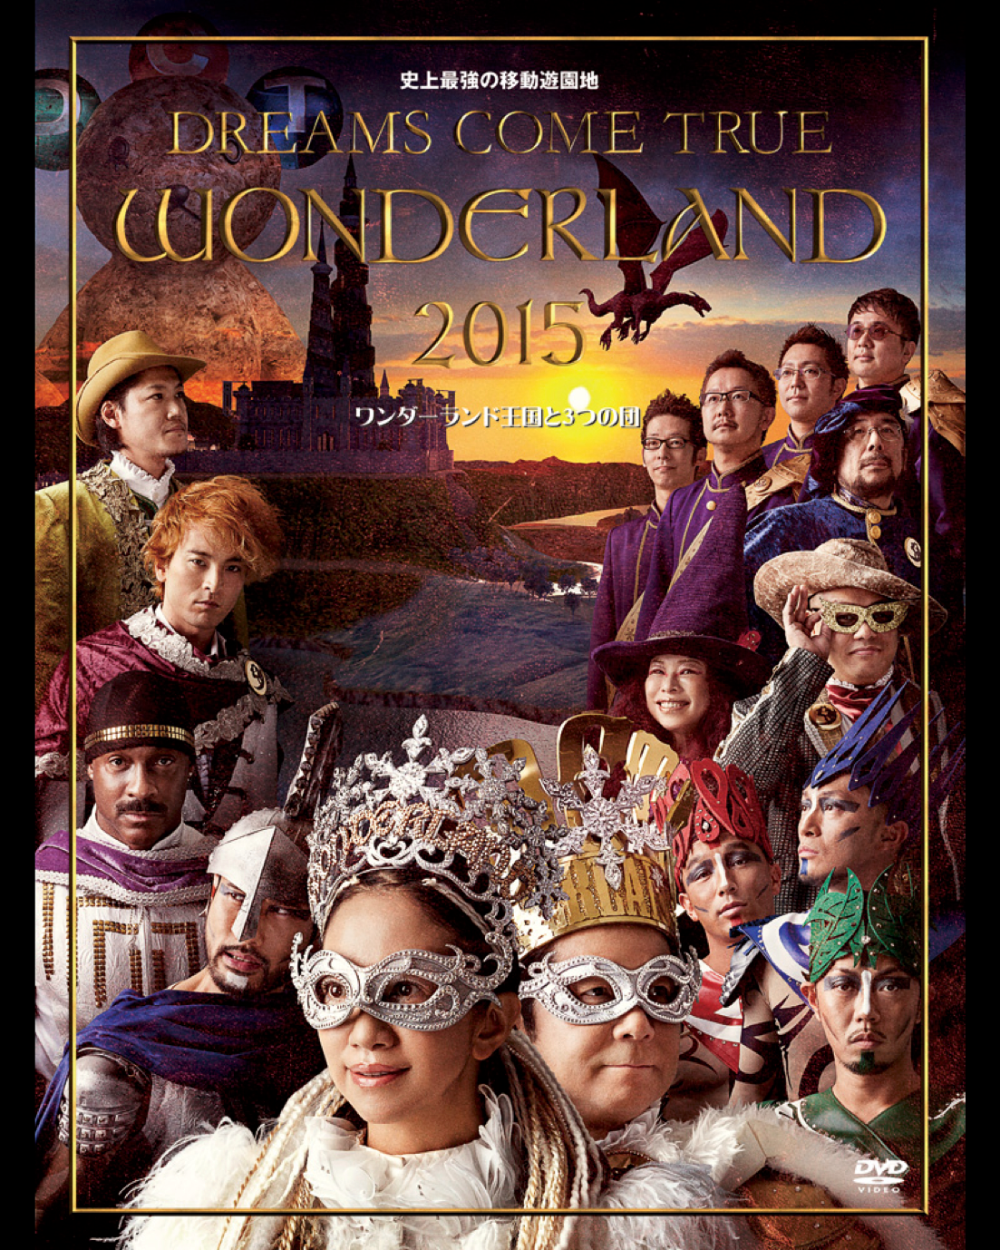 DREAMS COME TRUE【DVD】史上最強の移動遊園地 DREAMS COME TRUE WONDERLAND 2015 ワンダーランド王国と3つの団